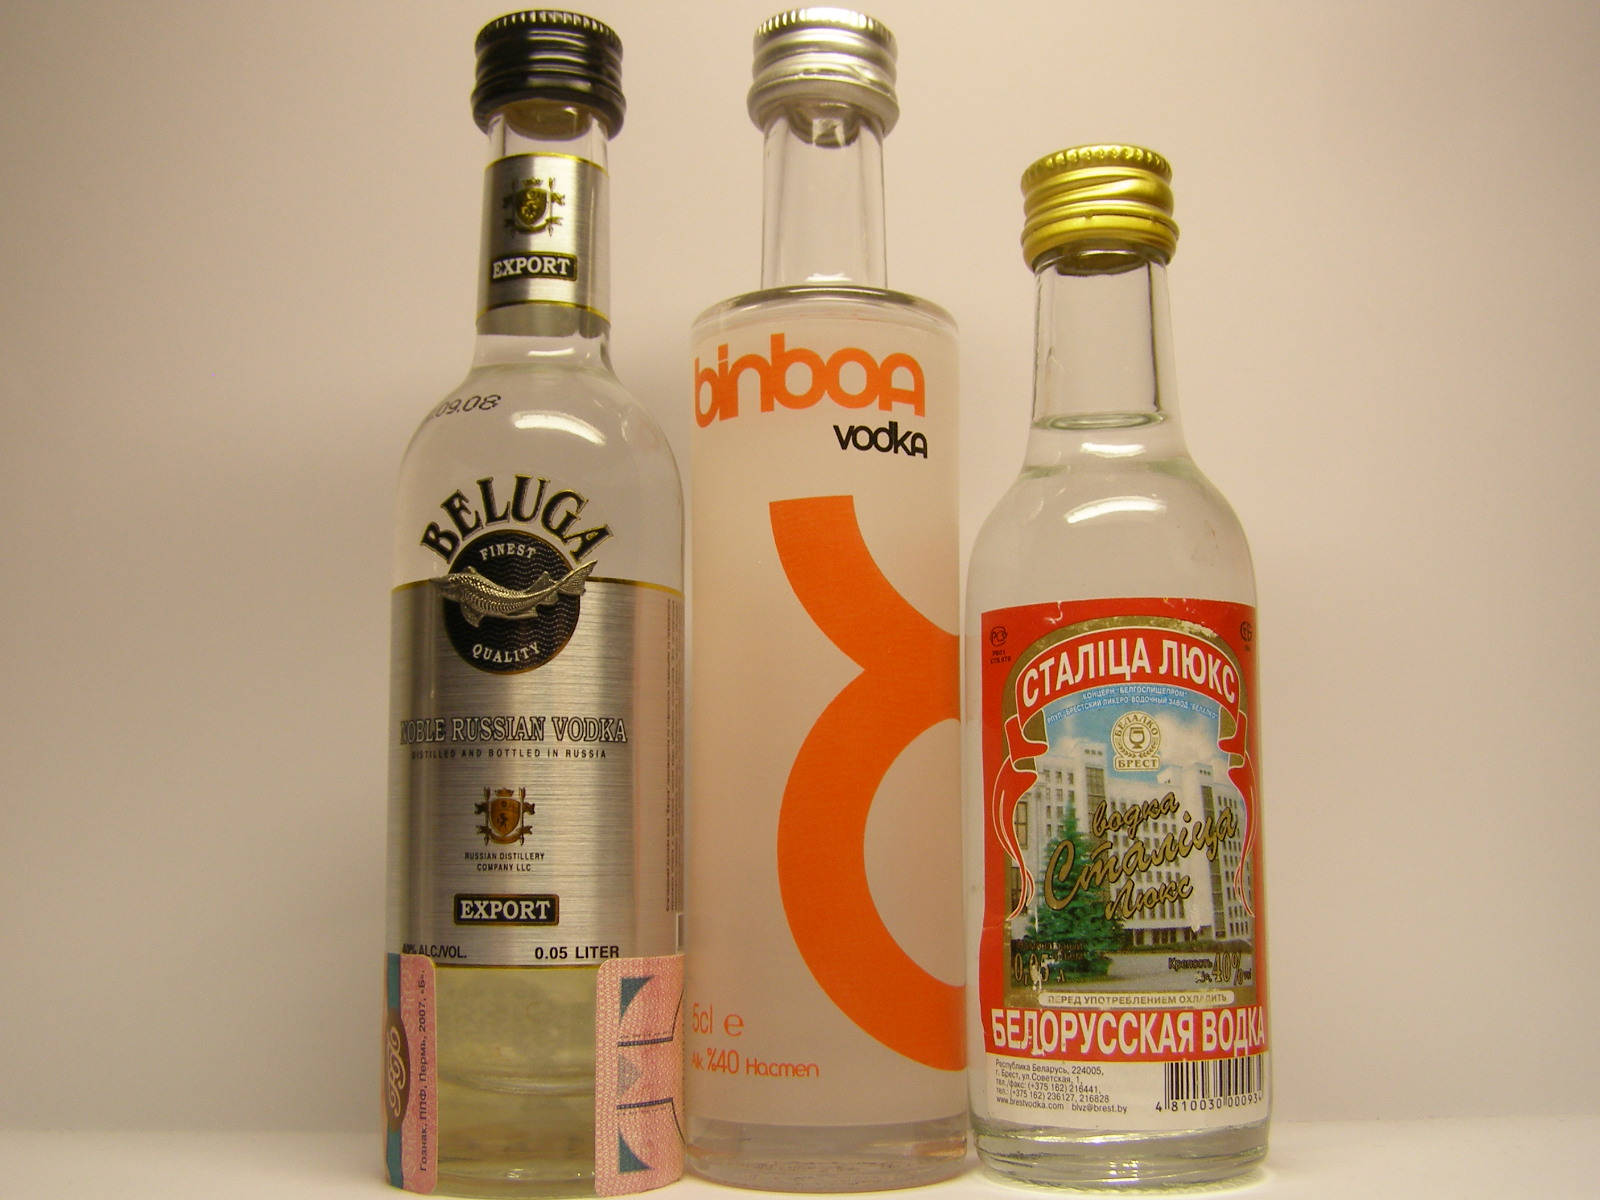 Beluga, Binboa, And Petergoff Spirytus Vodka Picture